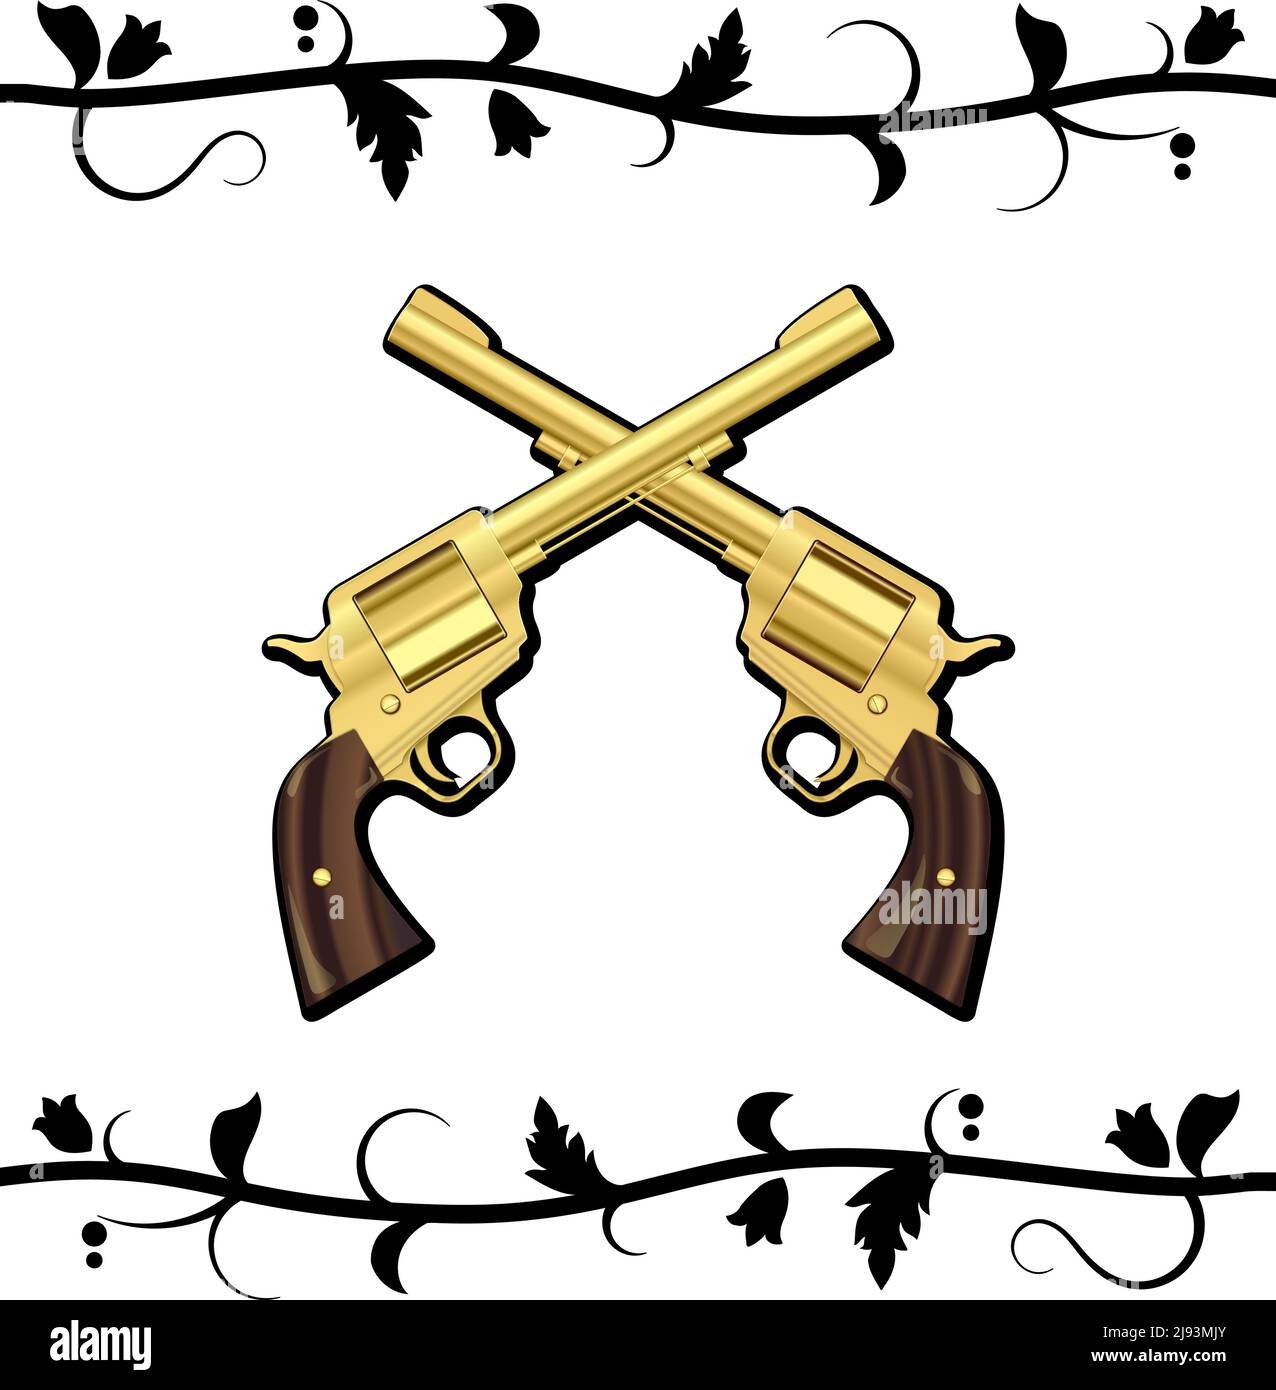 Gold Crossed Guns isolated on white background. Vector illustration. EPS10 opacity Stock Vector